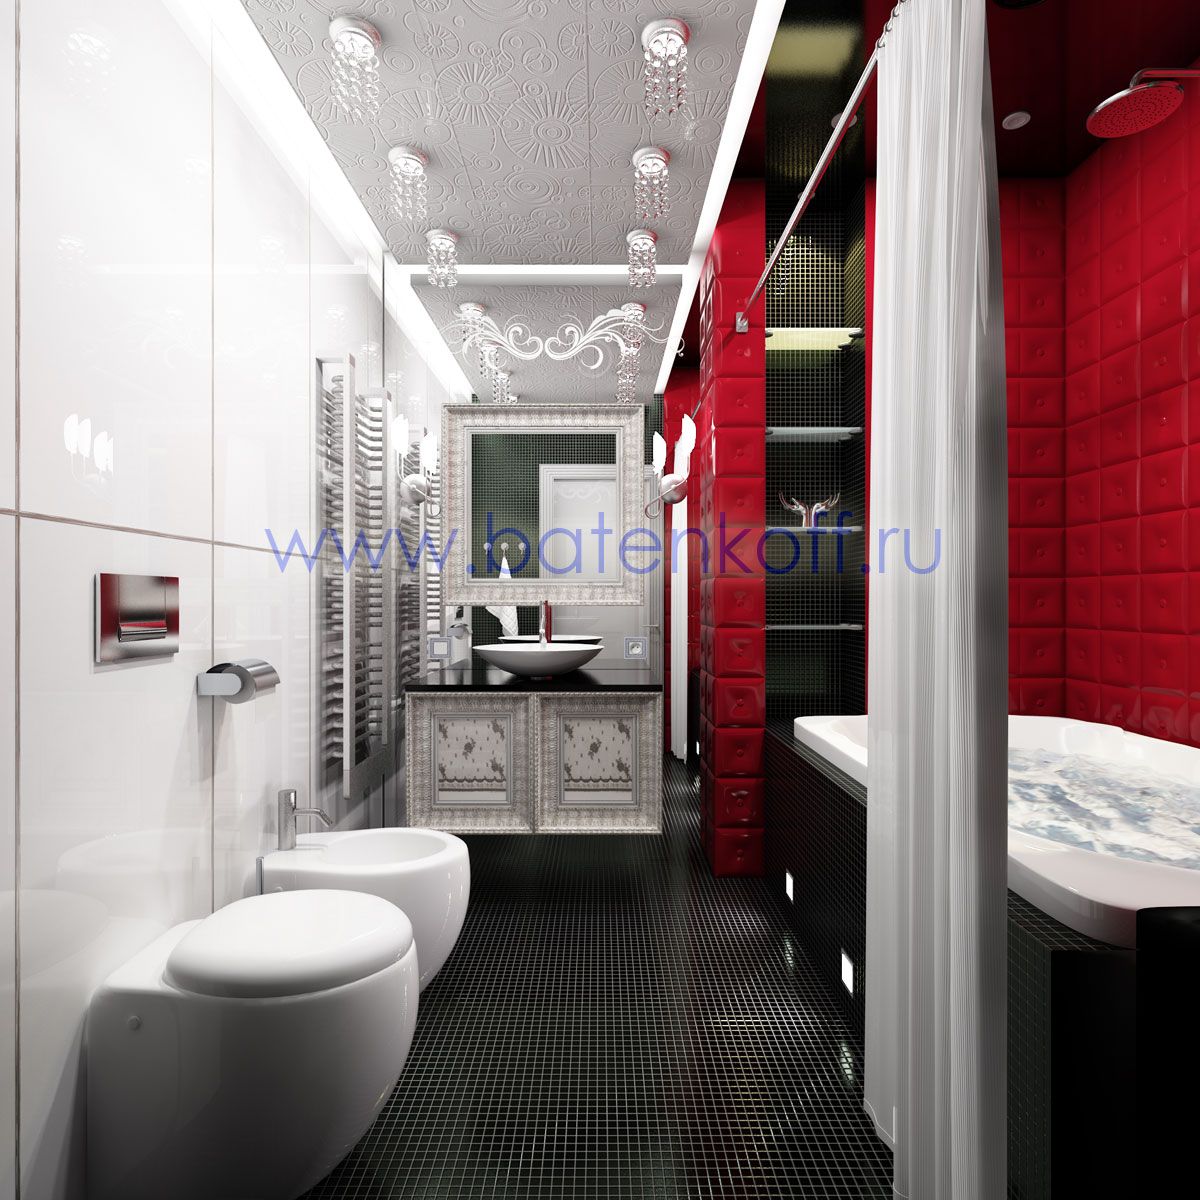 Красно бело черная ванная комната